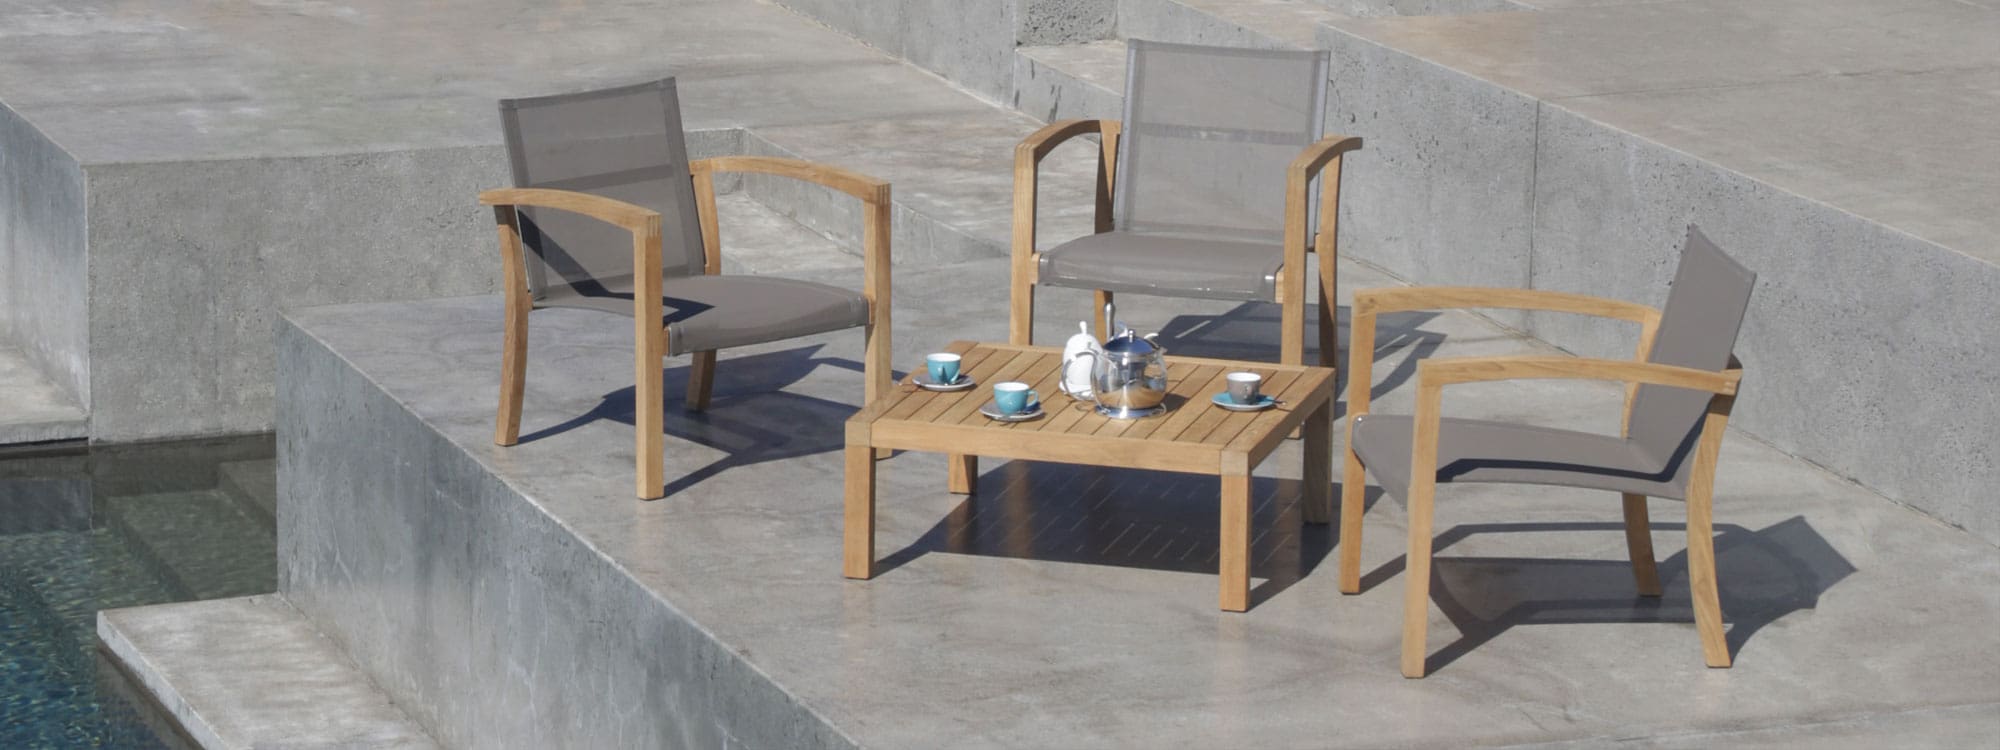 Image of XQI luxury teak garden lounge furniture by Royal Botania on poured concrete poolside